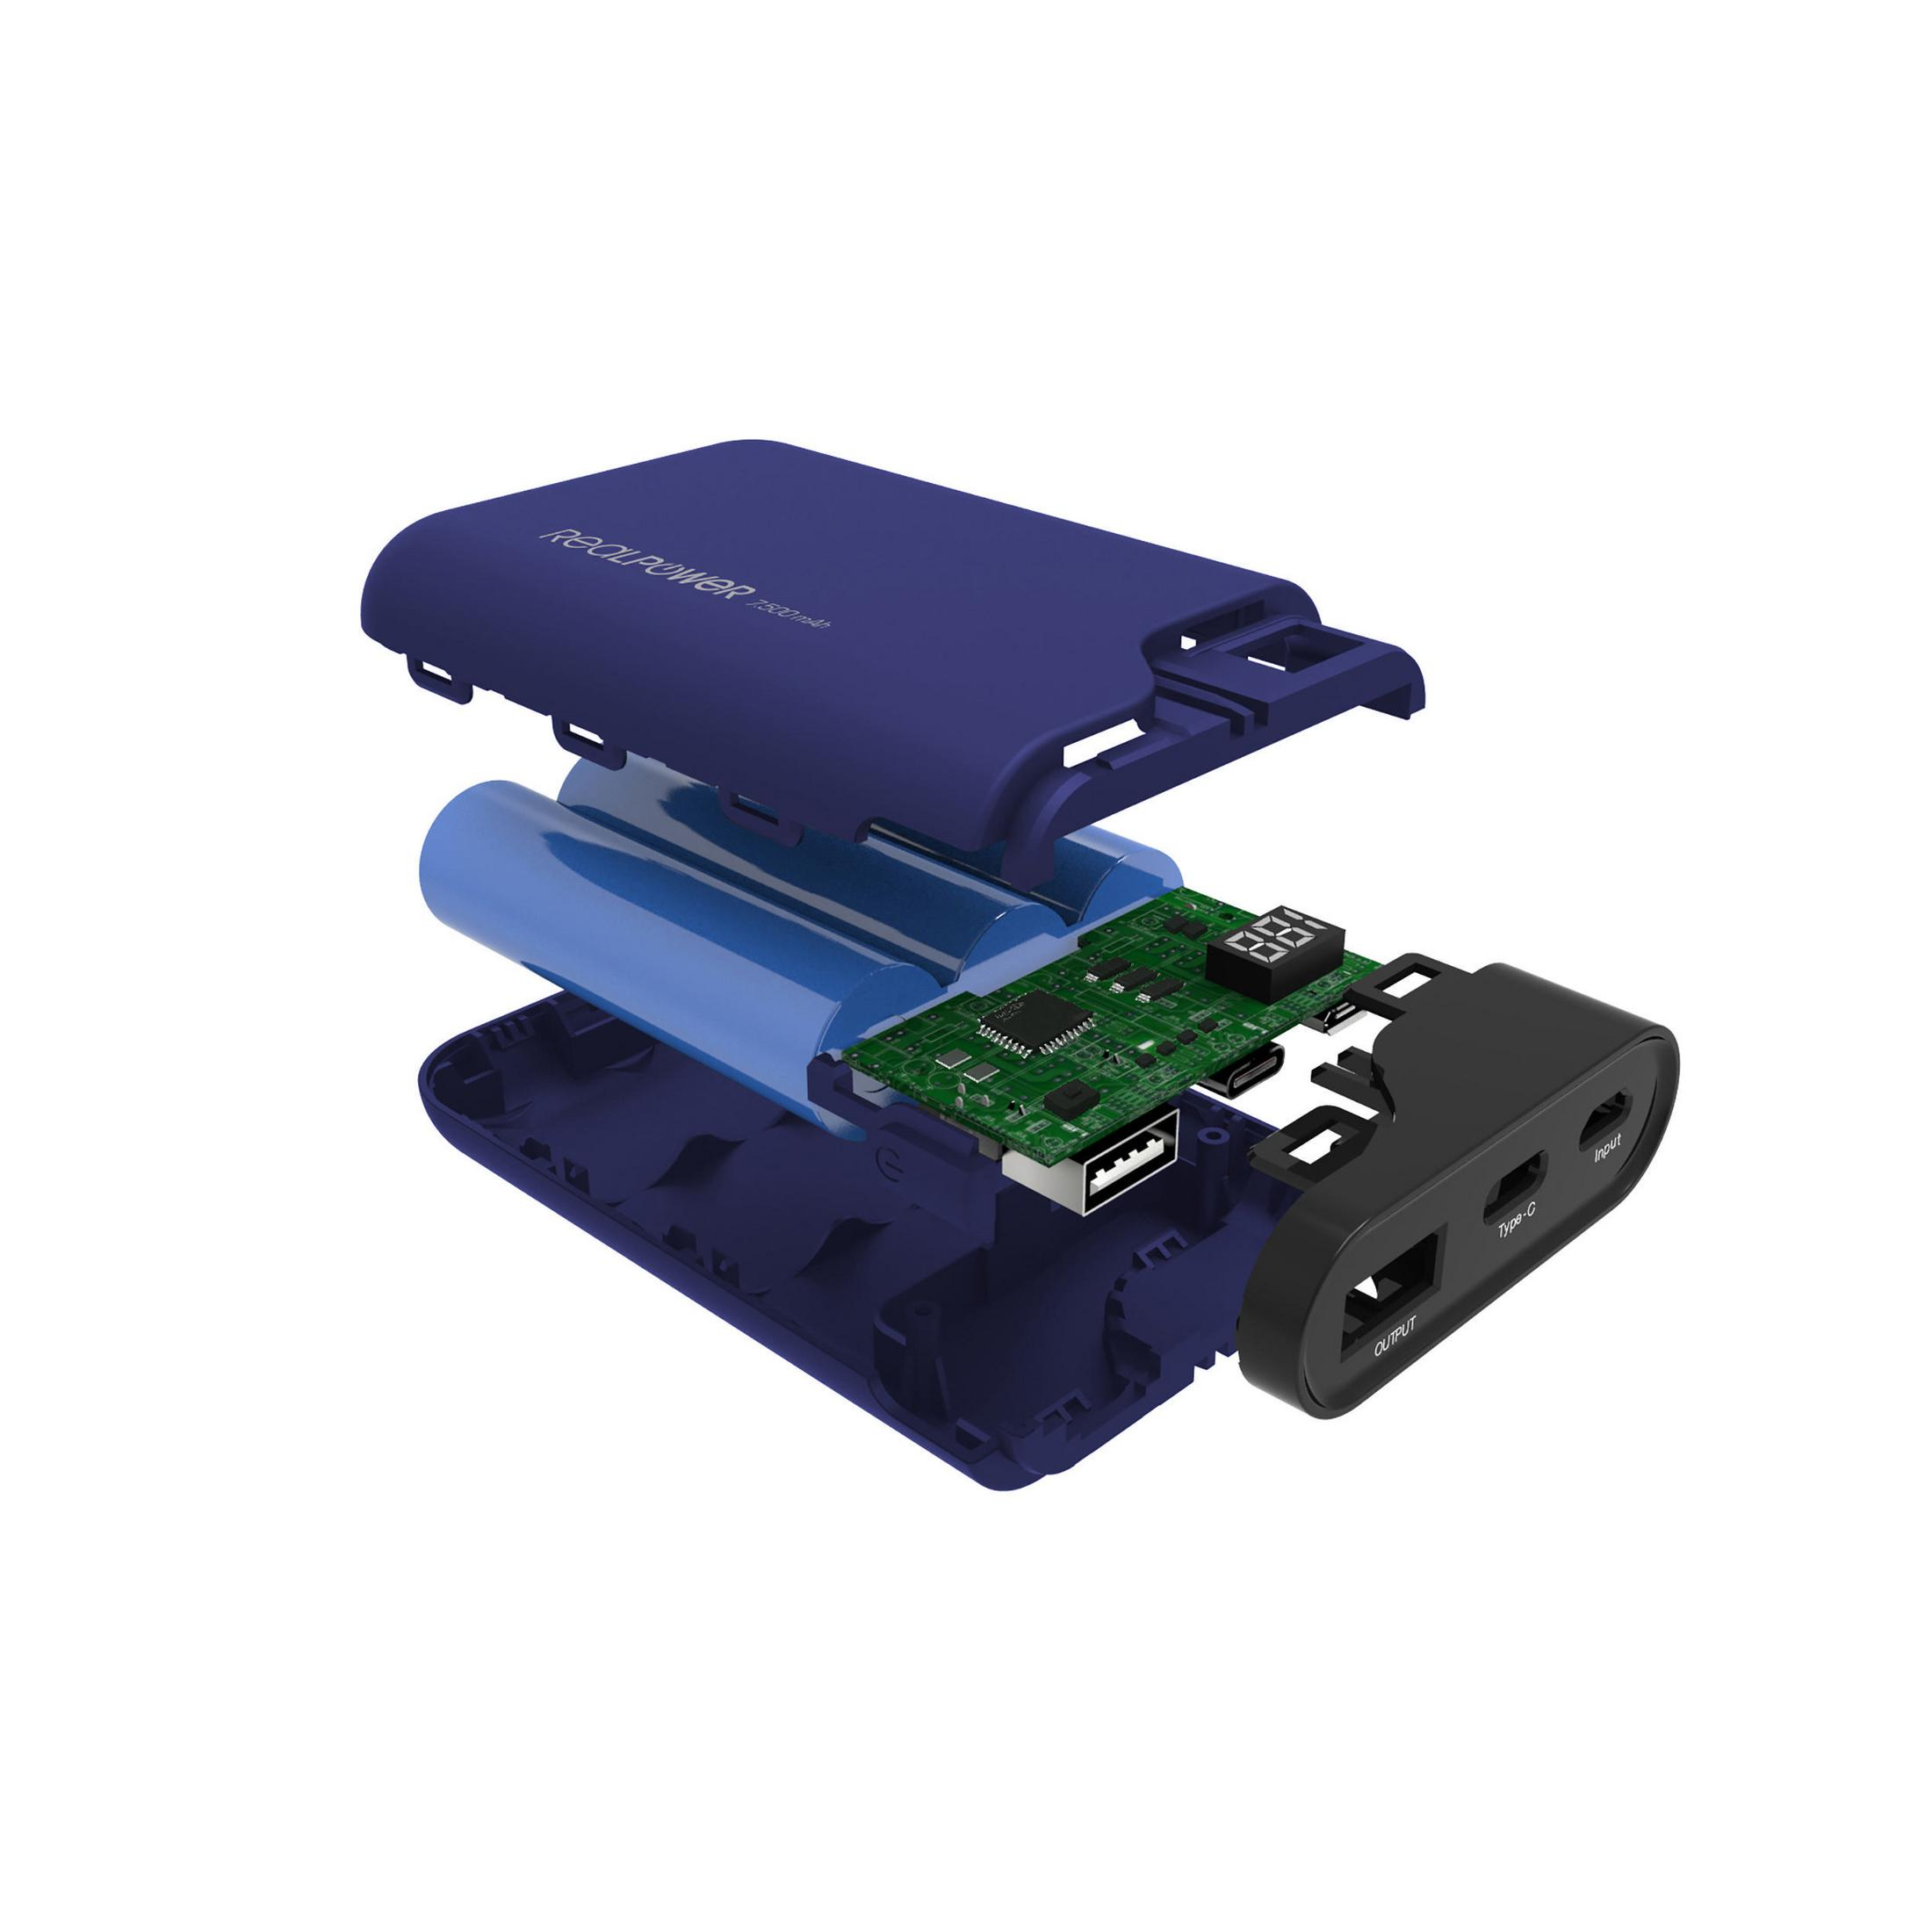 USB BLUE 333642 Powerbank + PB-7500C Blue REALPOWER NAVY mAh 7500 LADEPORTS 2X Navy